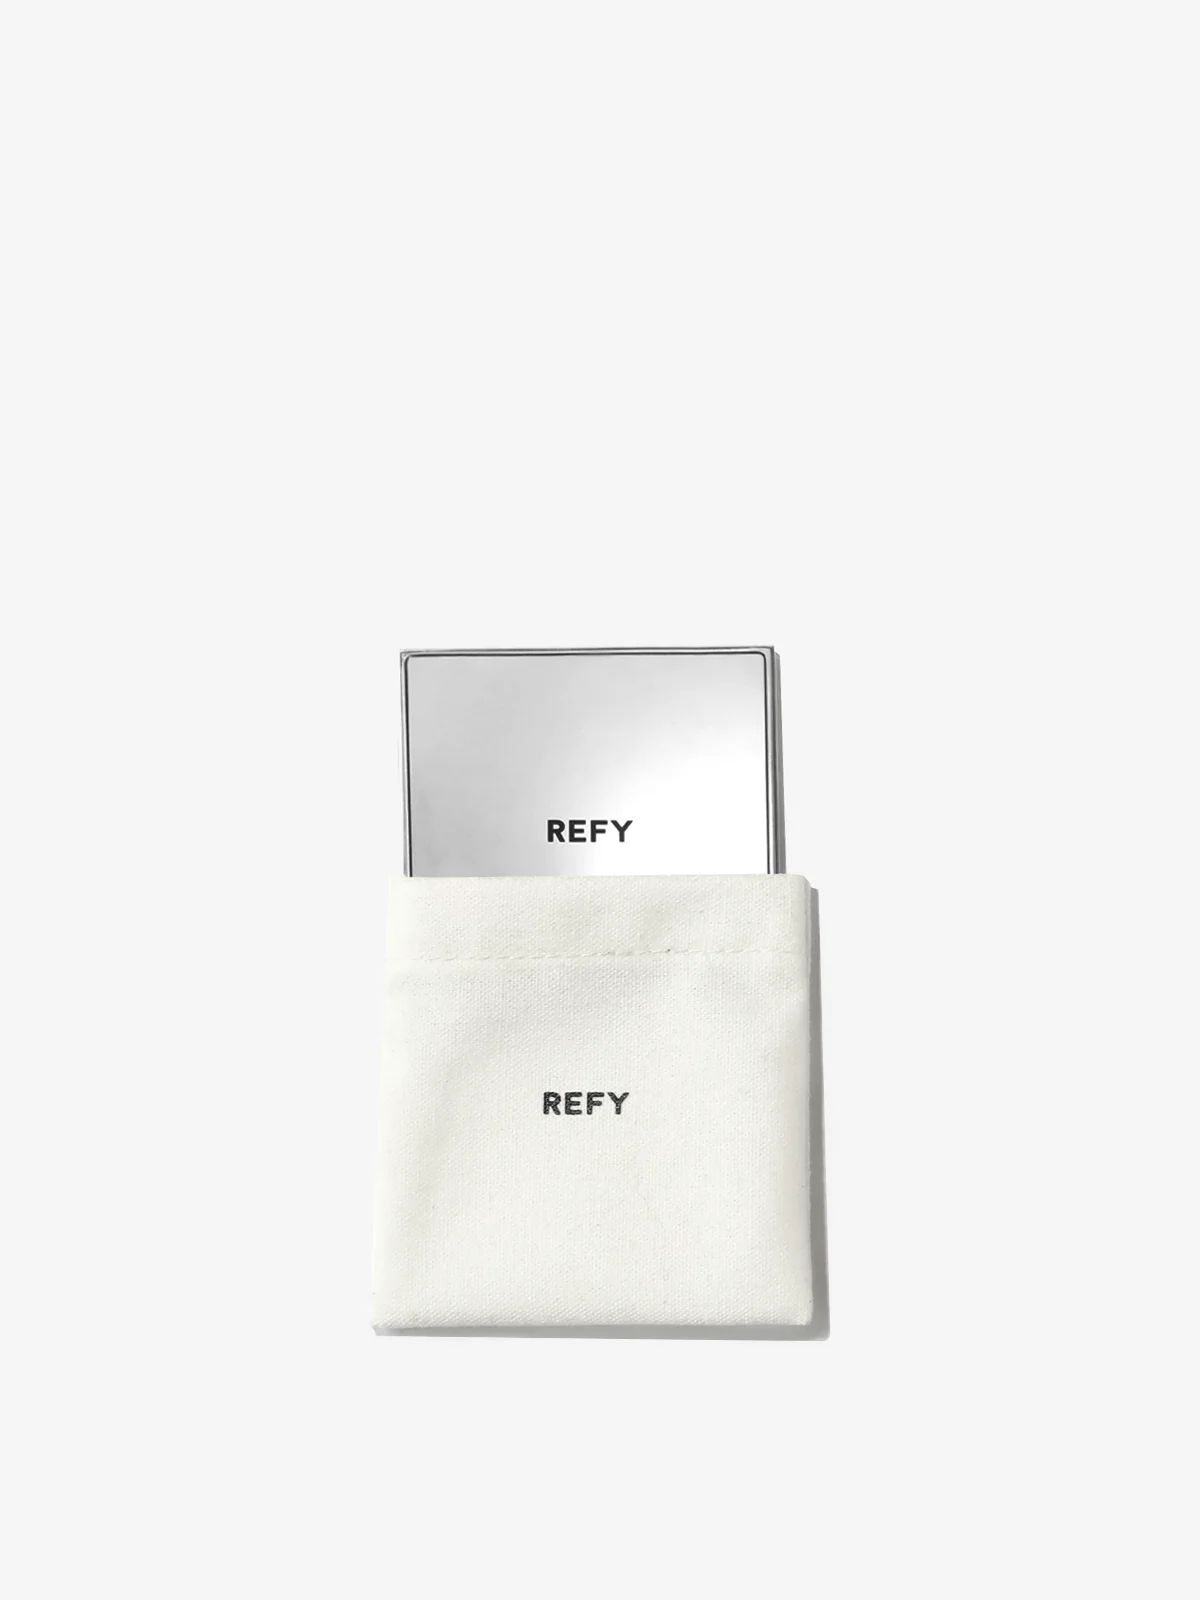 REFY Compact Mirror | REFY 